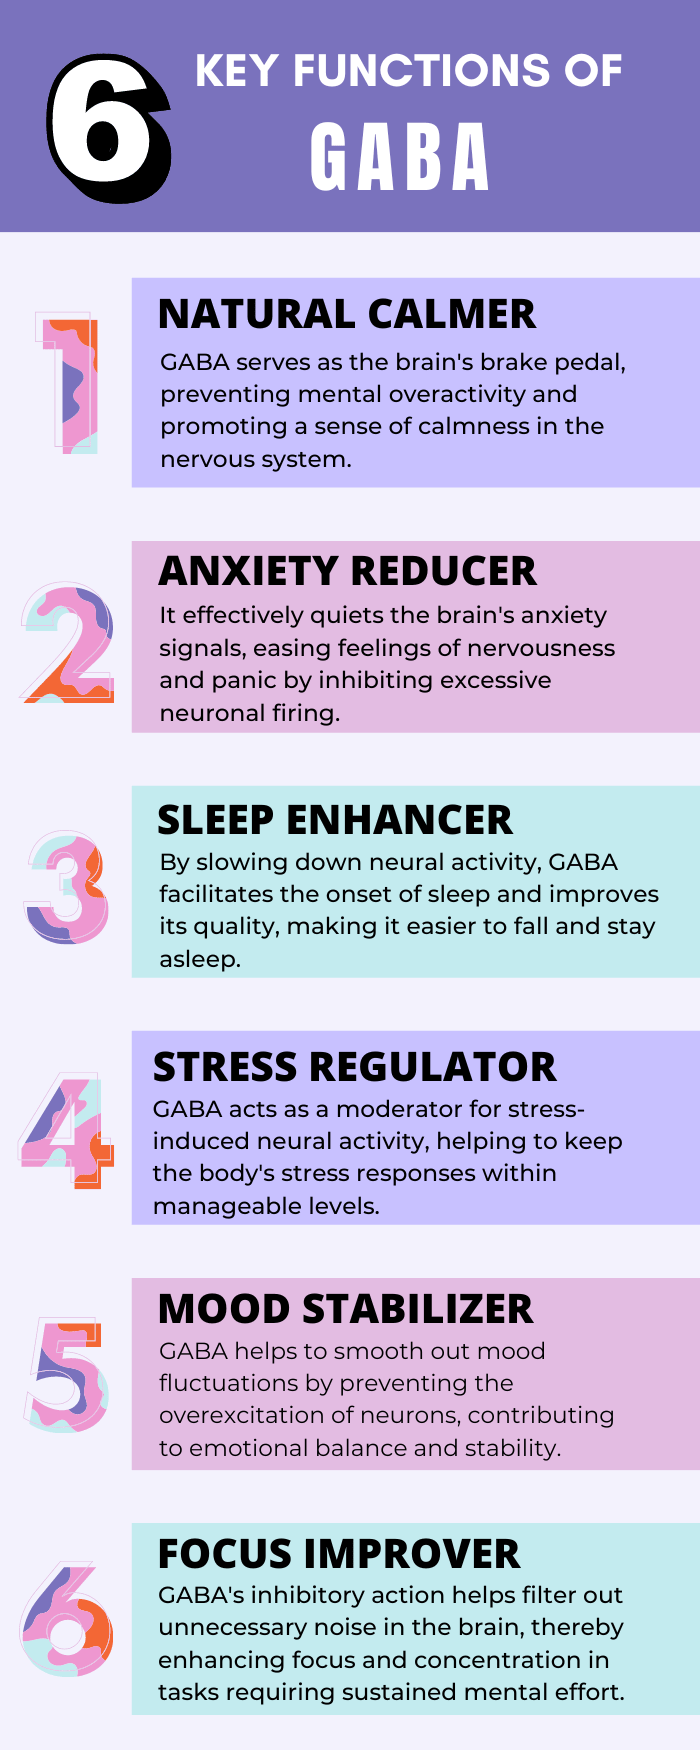 GABA calms, improves focus, stabilizes mood, regulates stress, enhances sleep, and reduces anxiety